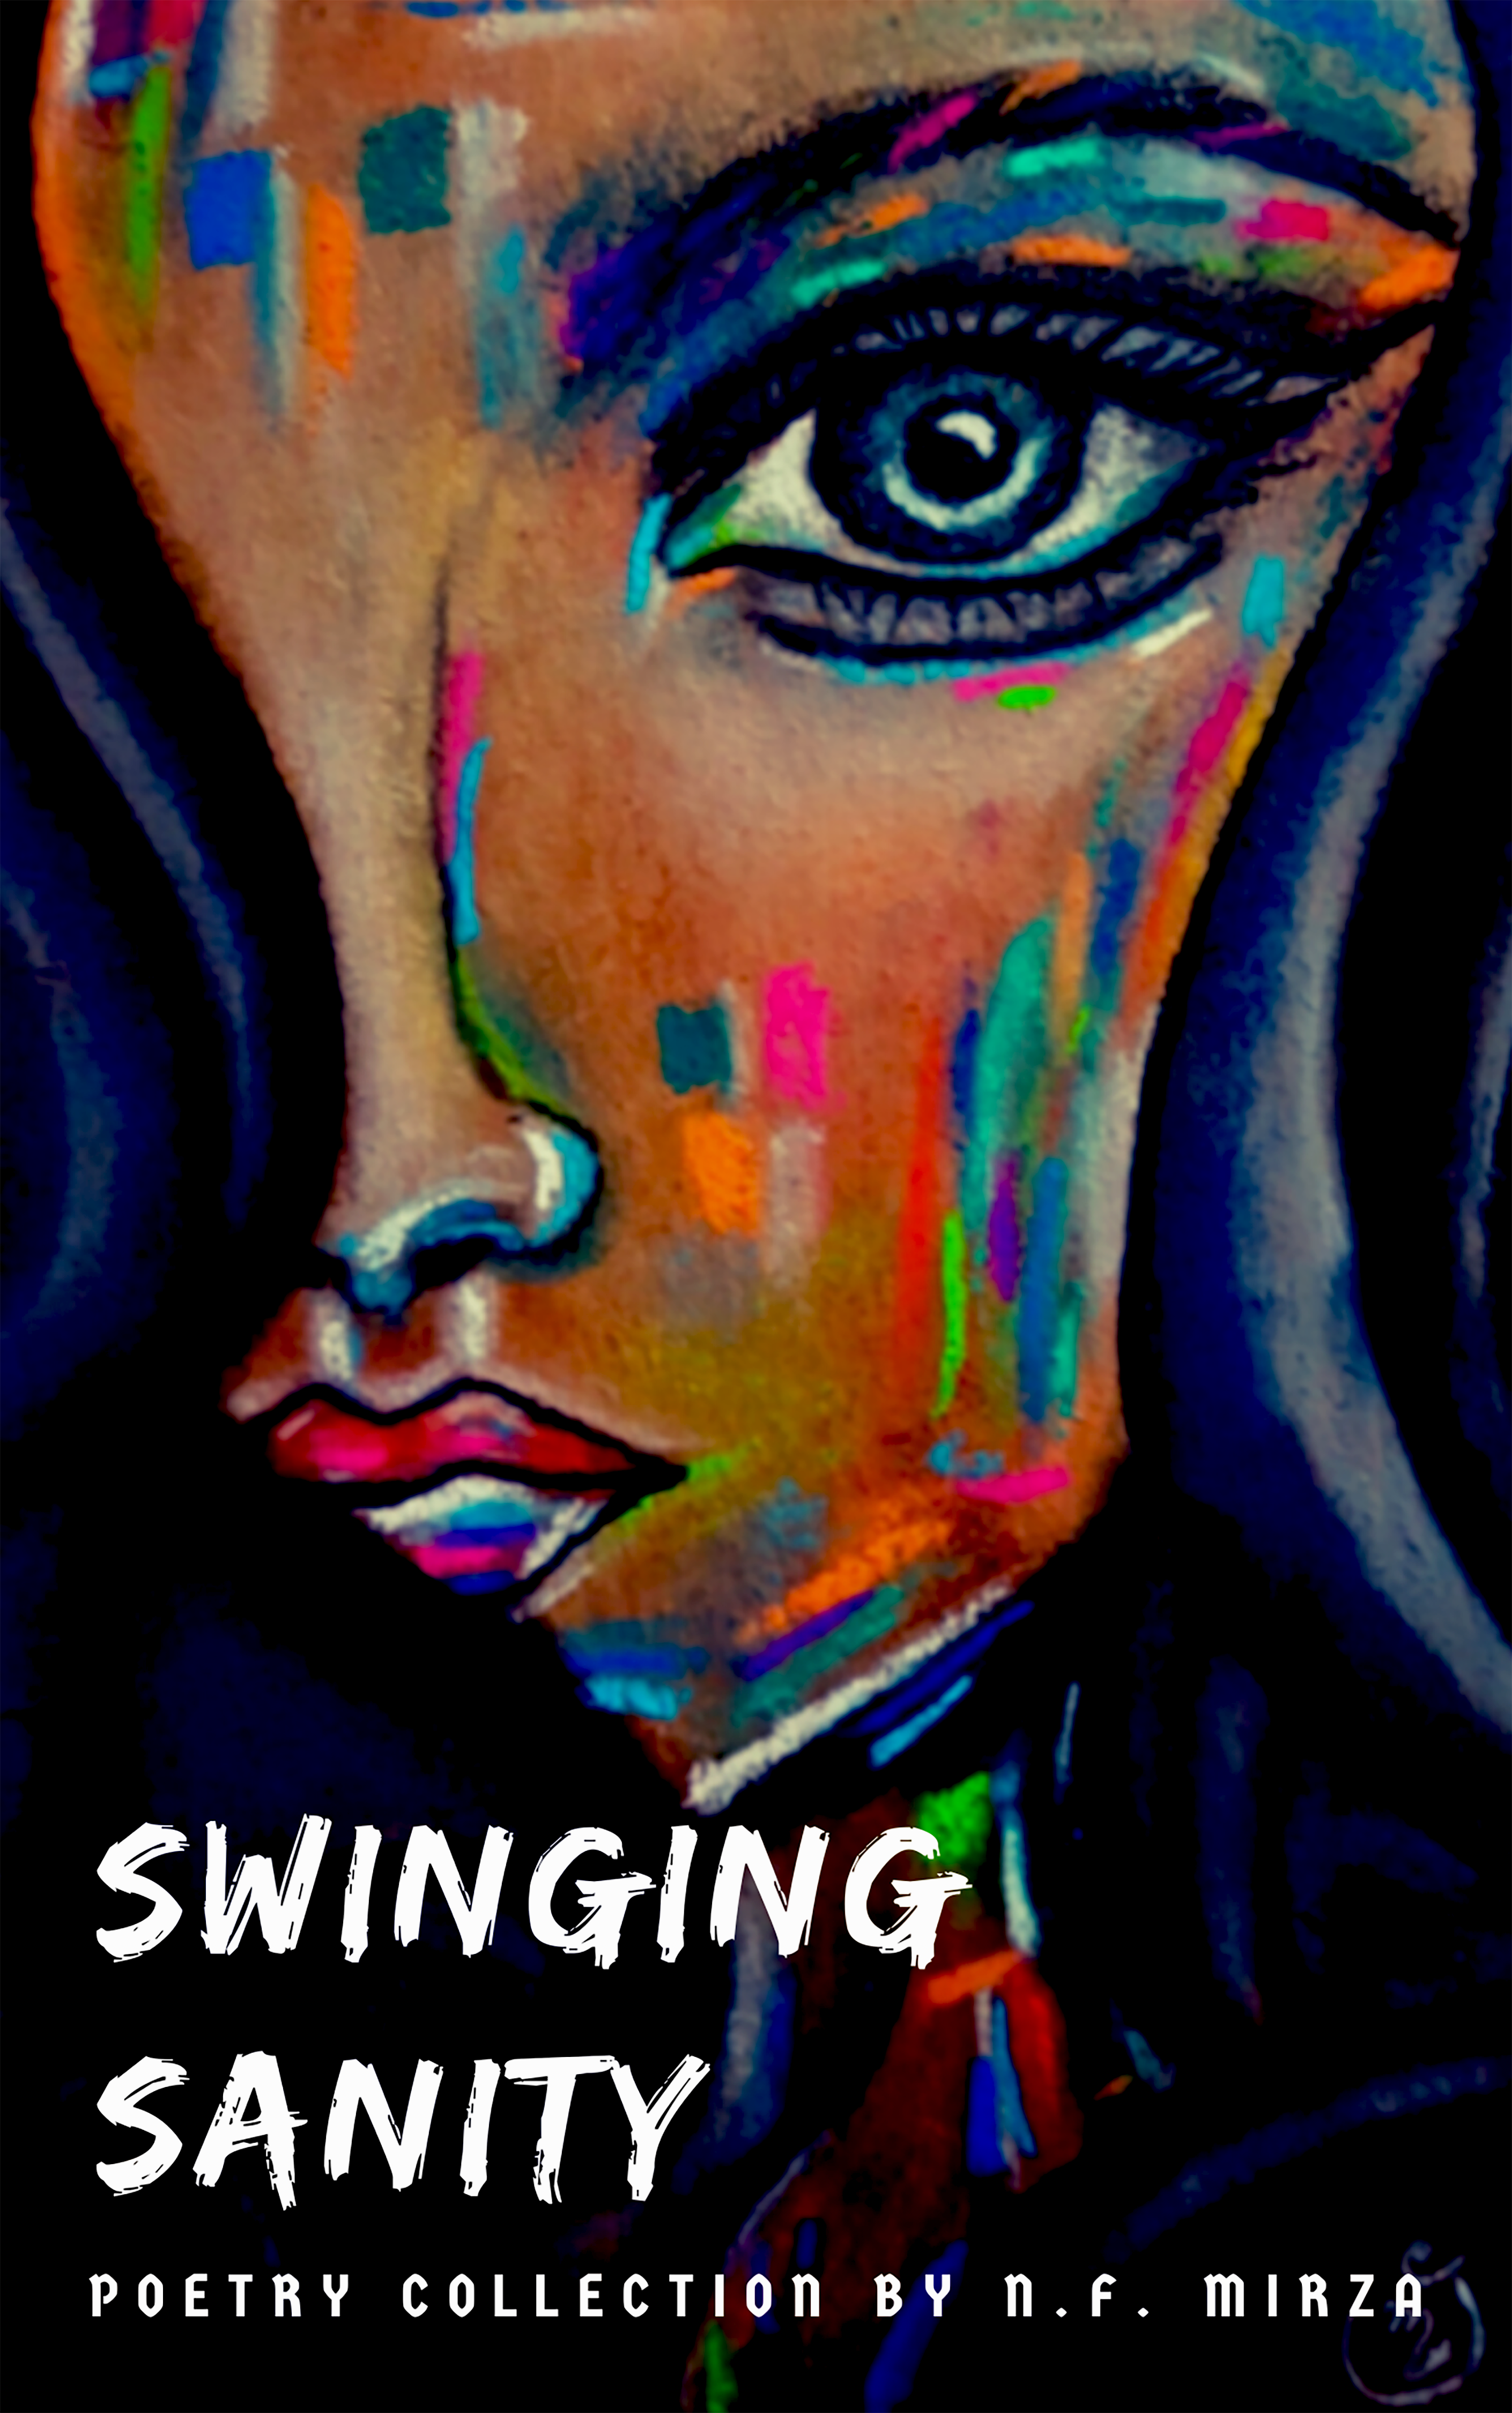 FREE: Swinging Sanity by N.F.Mirza